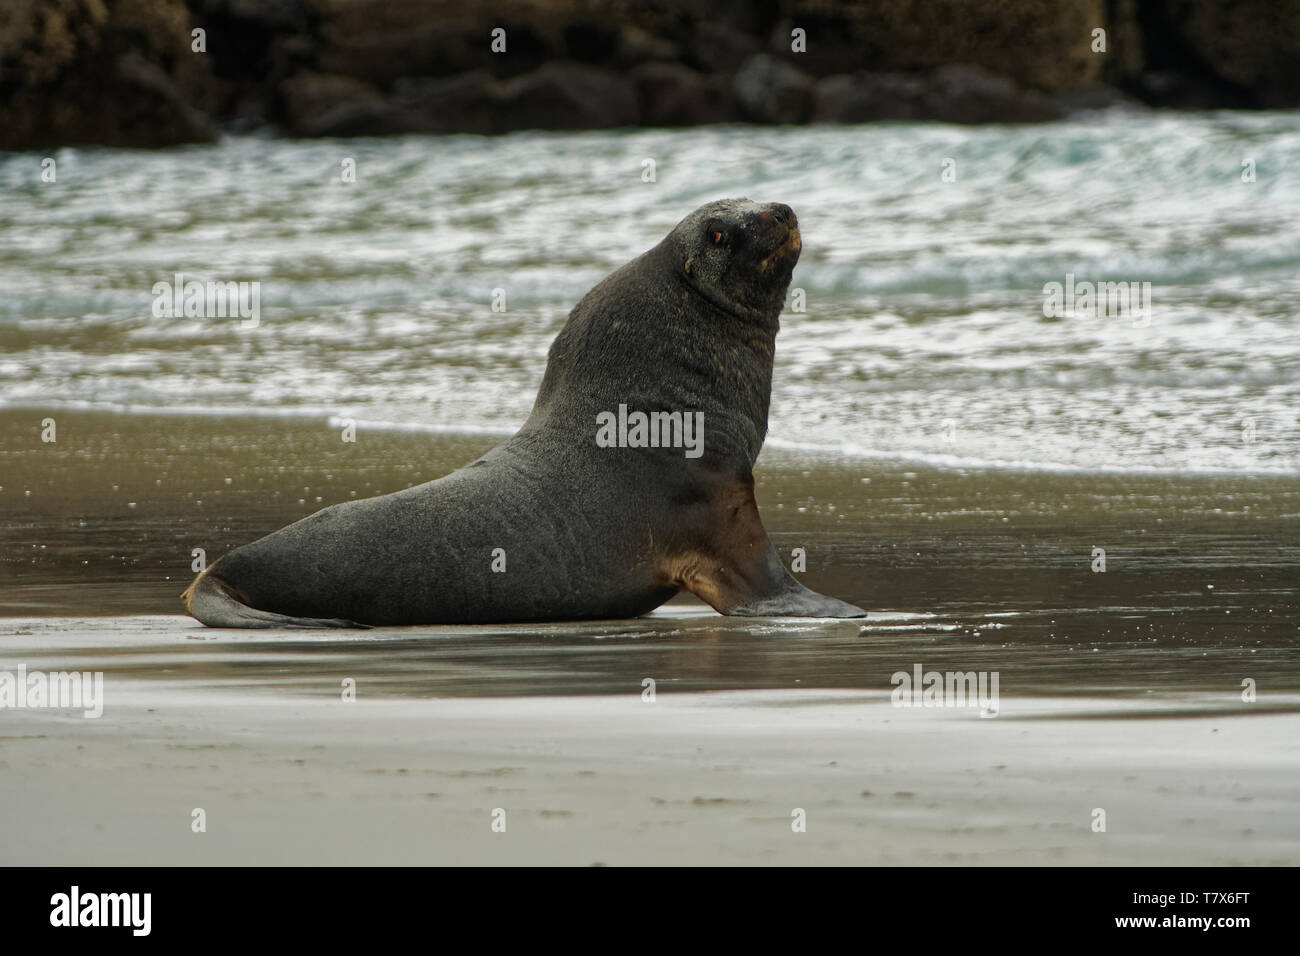 Nuova Zelanda sea lion - Phocarctos hookeri - whakahao sdraiato sulla spiaggia sabbiosa della baia in Nuova Zelanda. Foto Stock